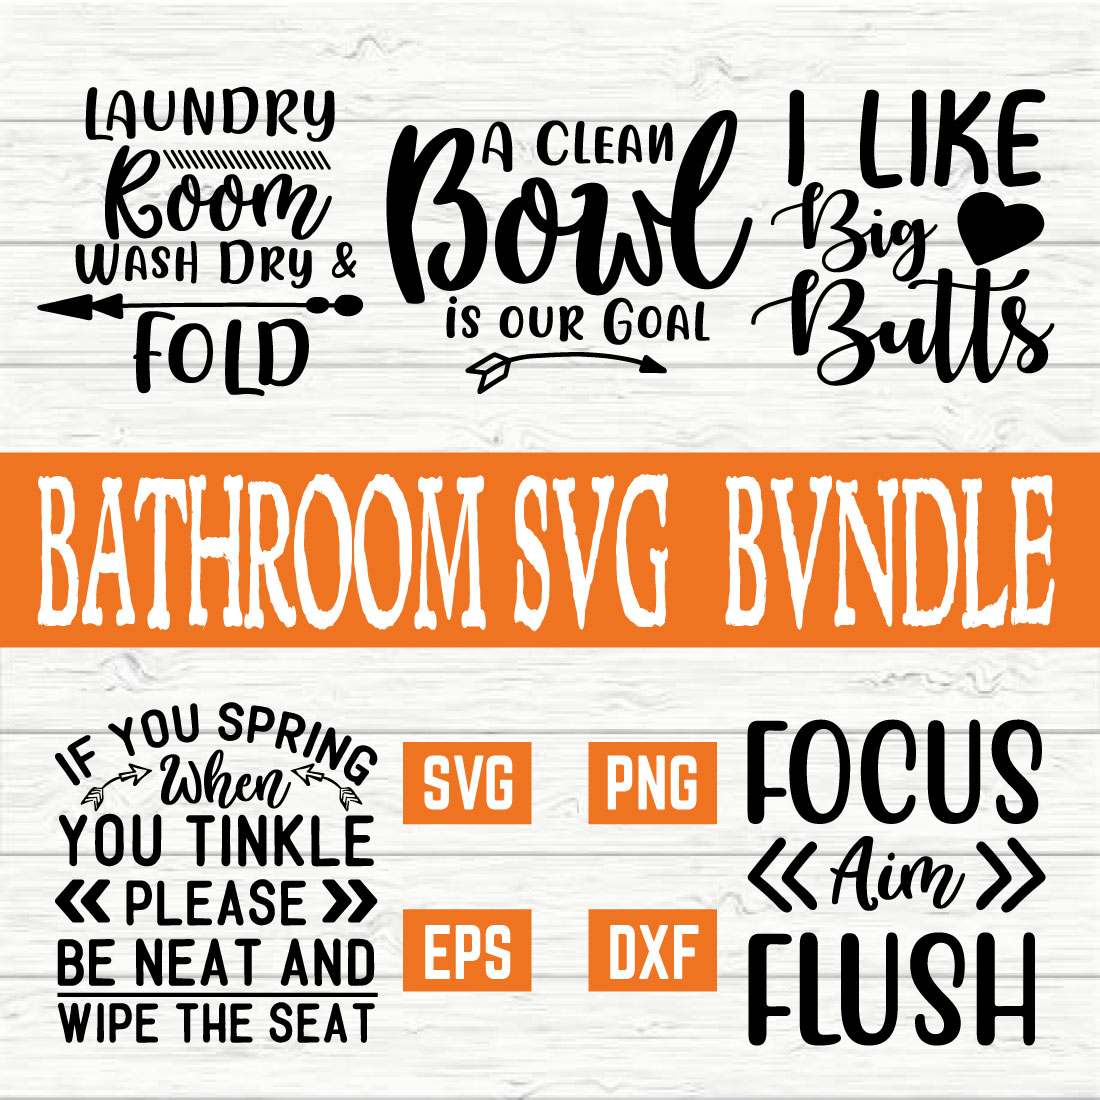 Bathroom T Shirt Design Bundle vol 5 cover image.